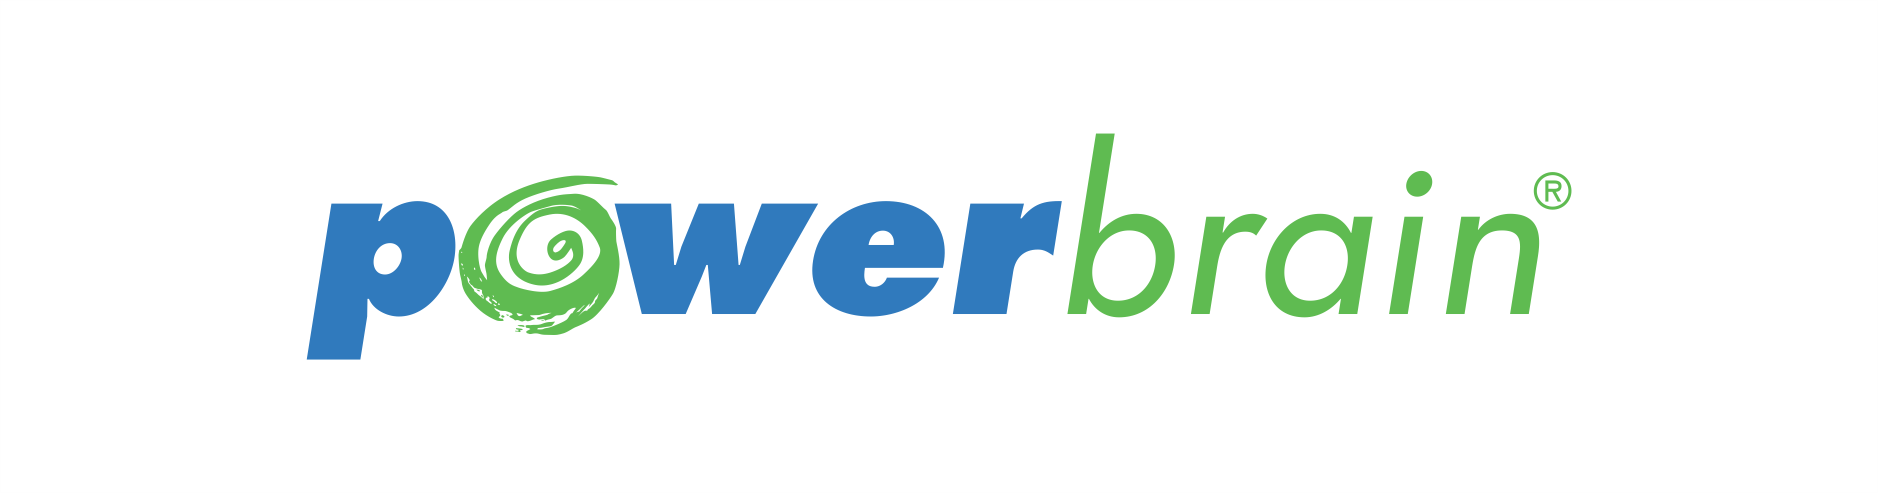 power brain logo